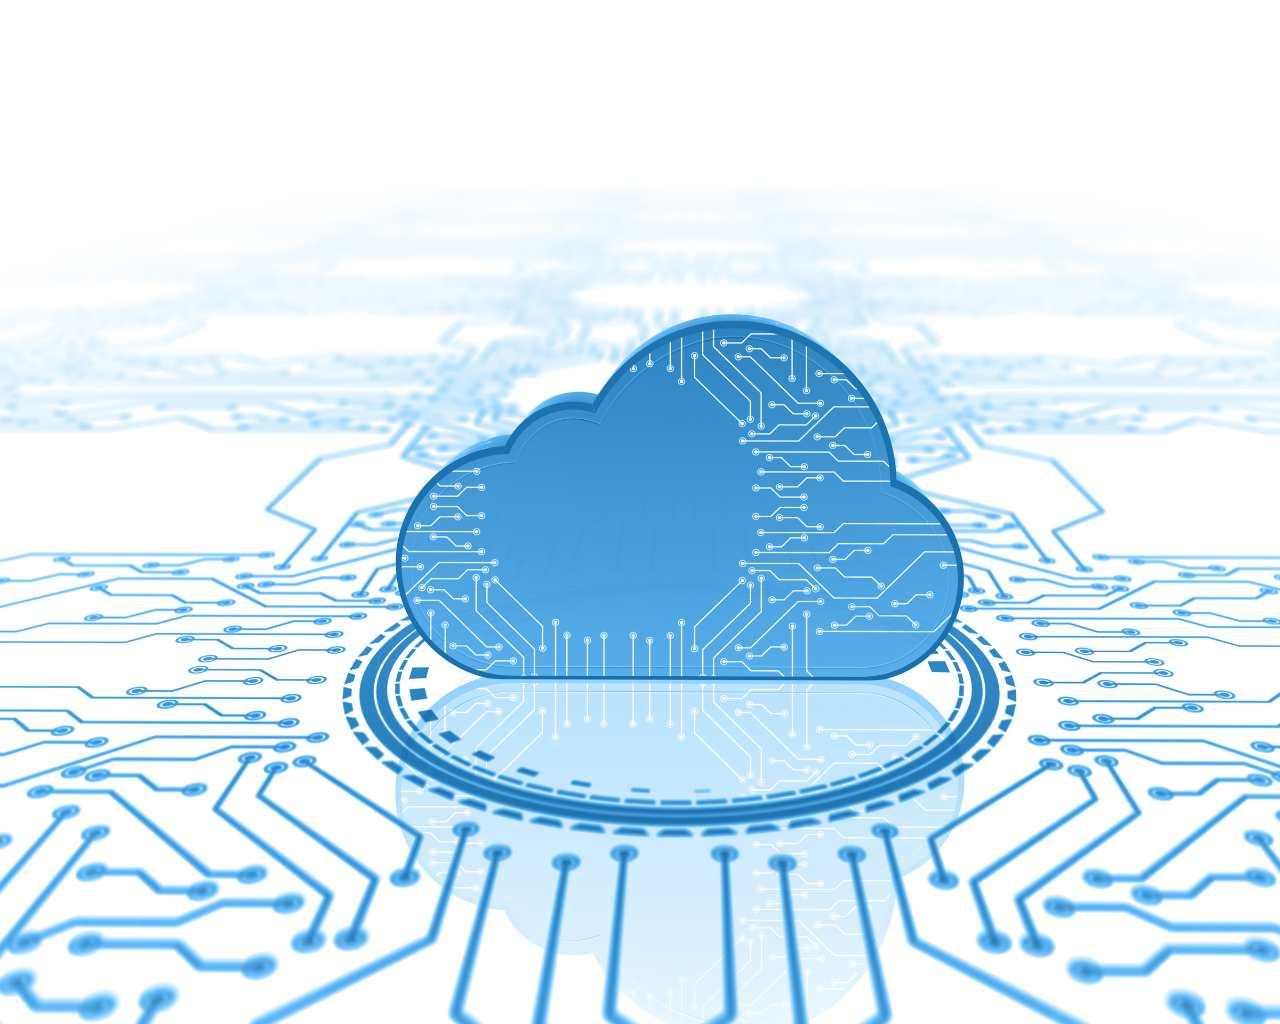 Uses of Cloud Computing